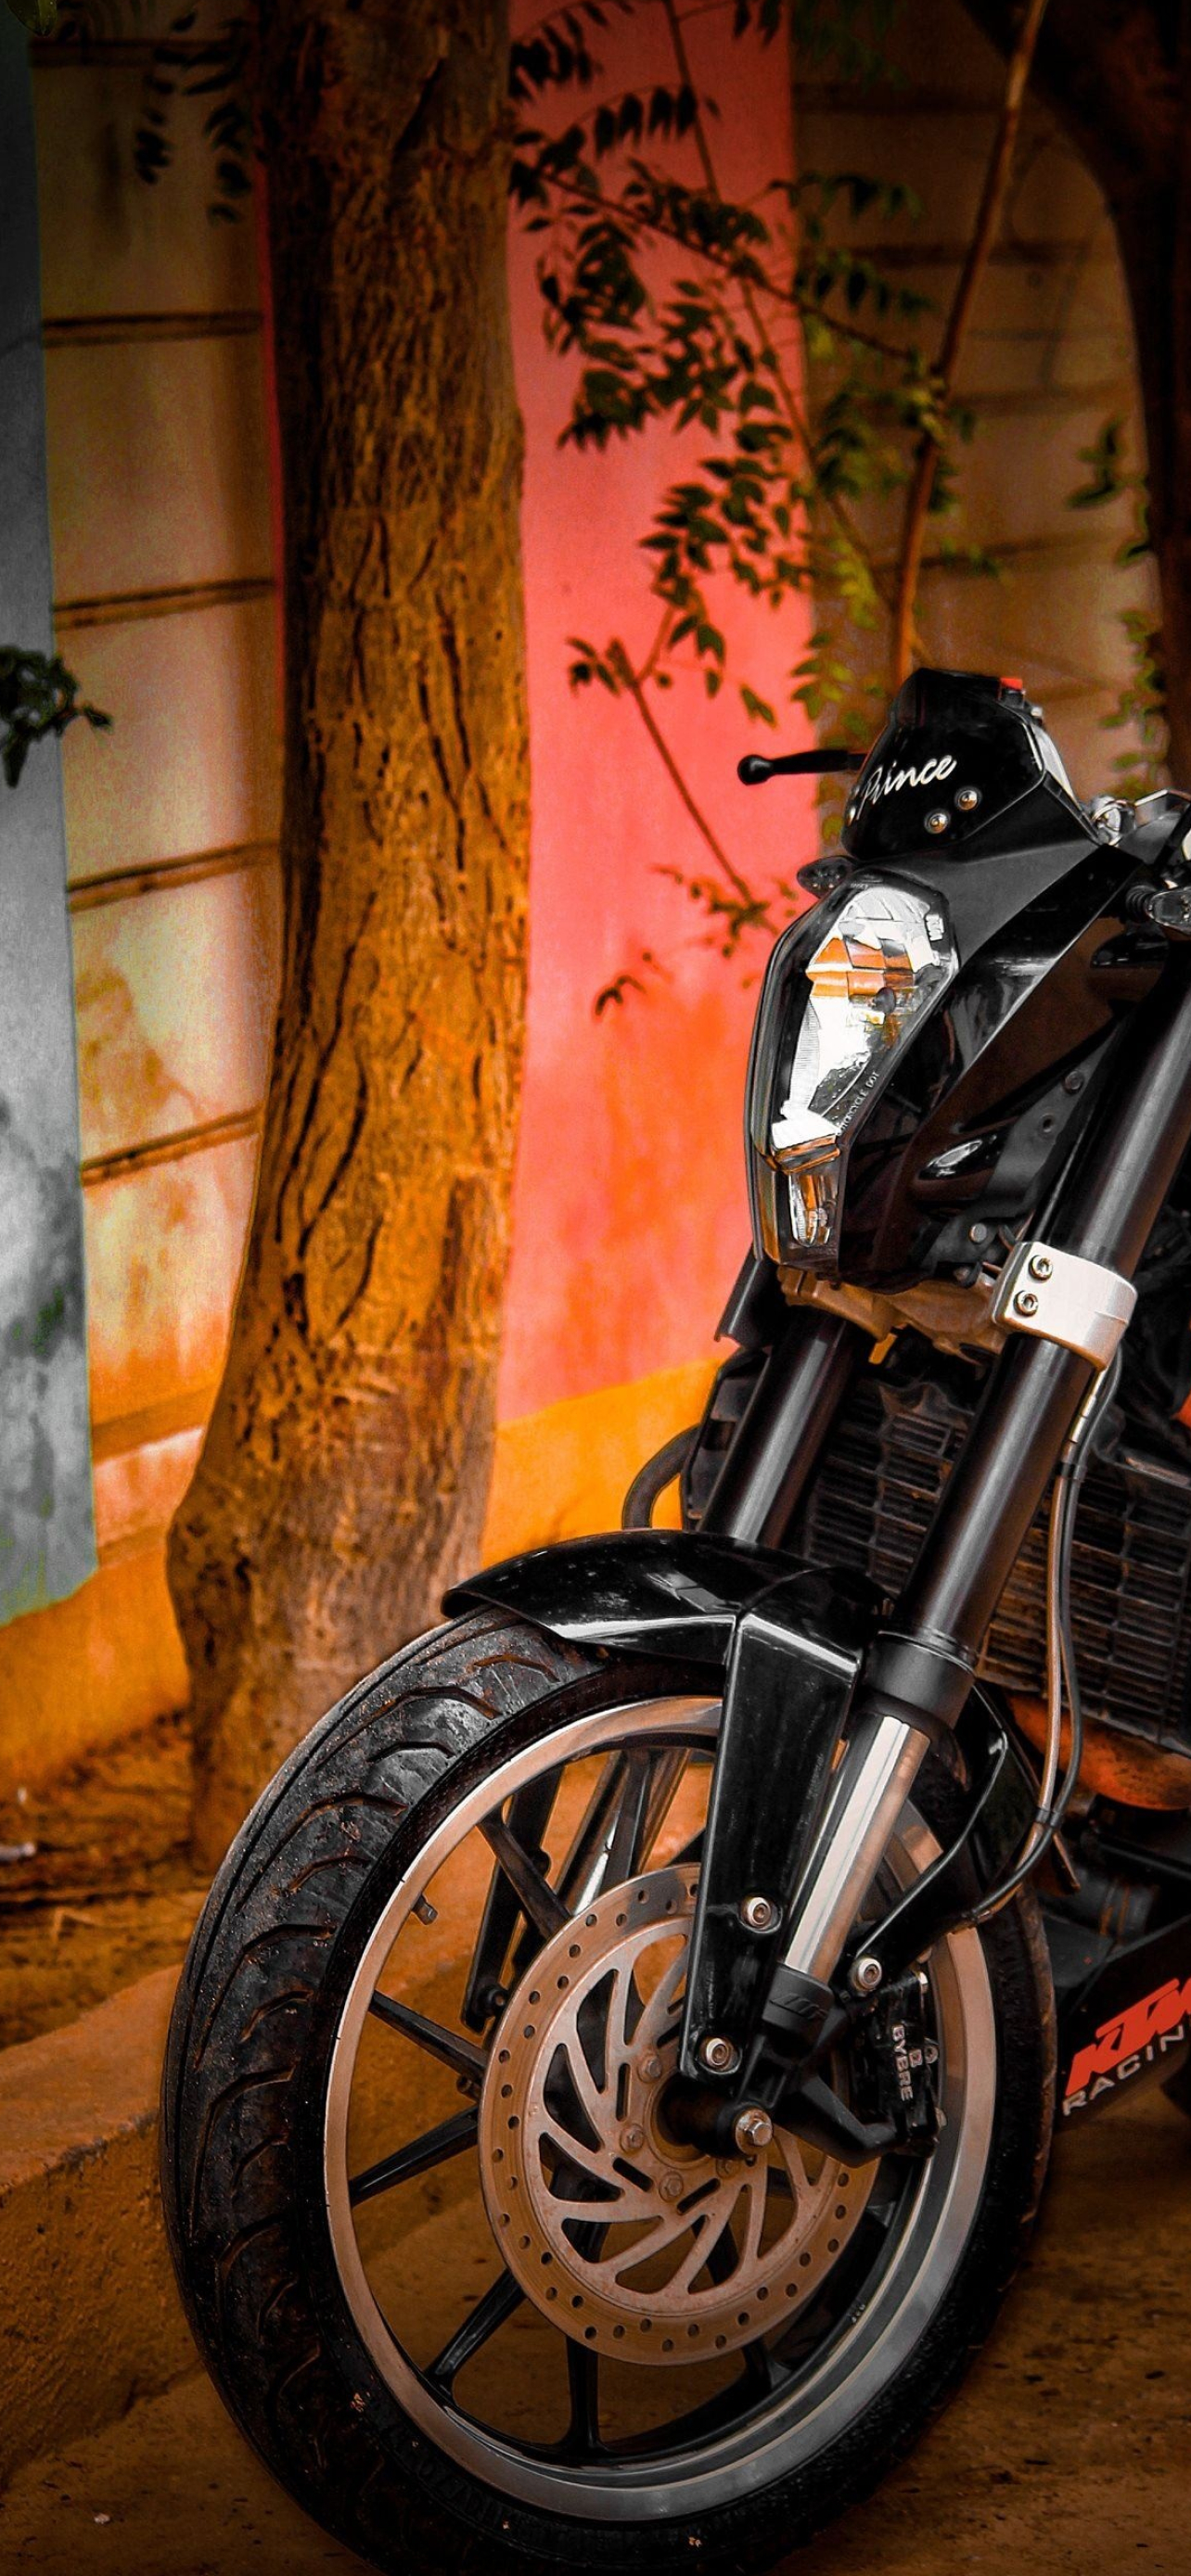 KTM Duke Bike, Latest iPhone HD Wallpapers, Cutting-edge Design, Iconic Motorcycle, 1290x2780 HD Handy